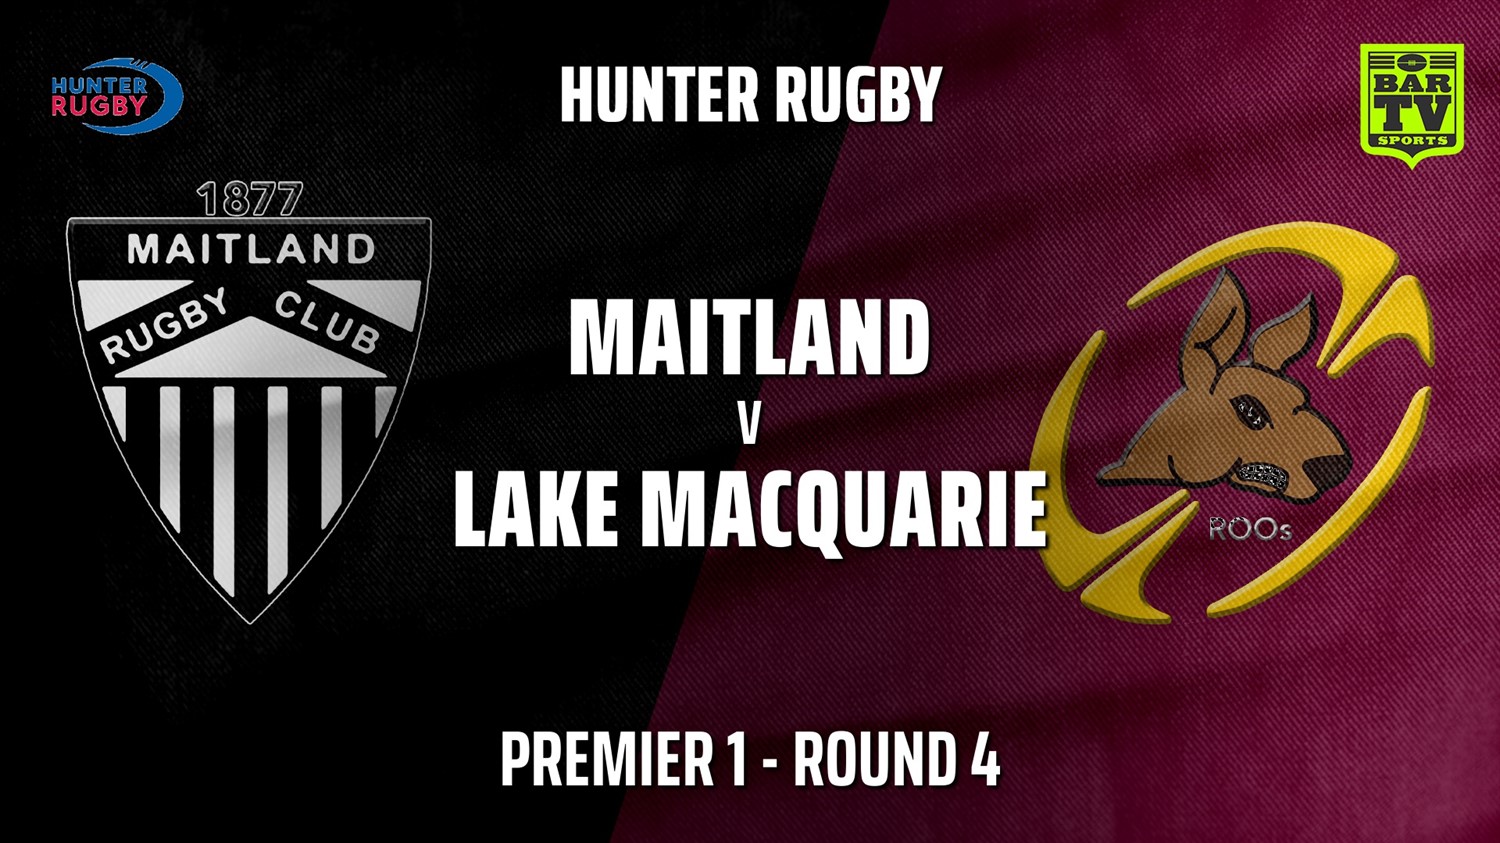 210508-HRU Round 4 - Premier 1 - Maitland v Lake Macquarie Slate Image